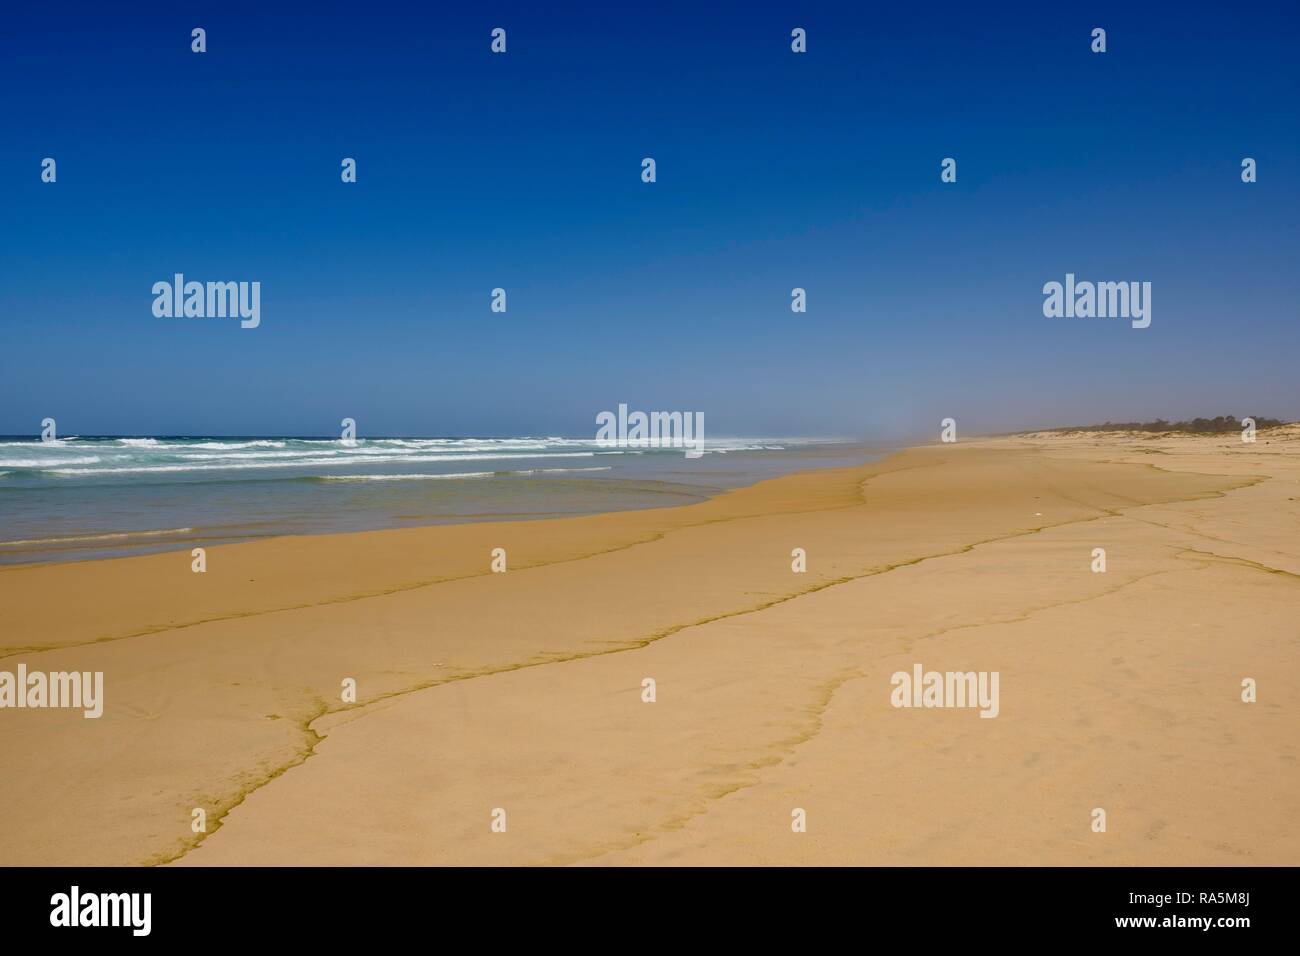 Lonely beach on the Atlantic coast, Dakar region, Senegal Stock Photo